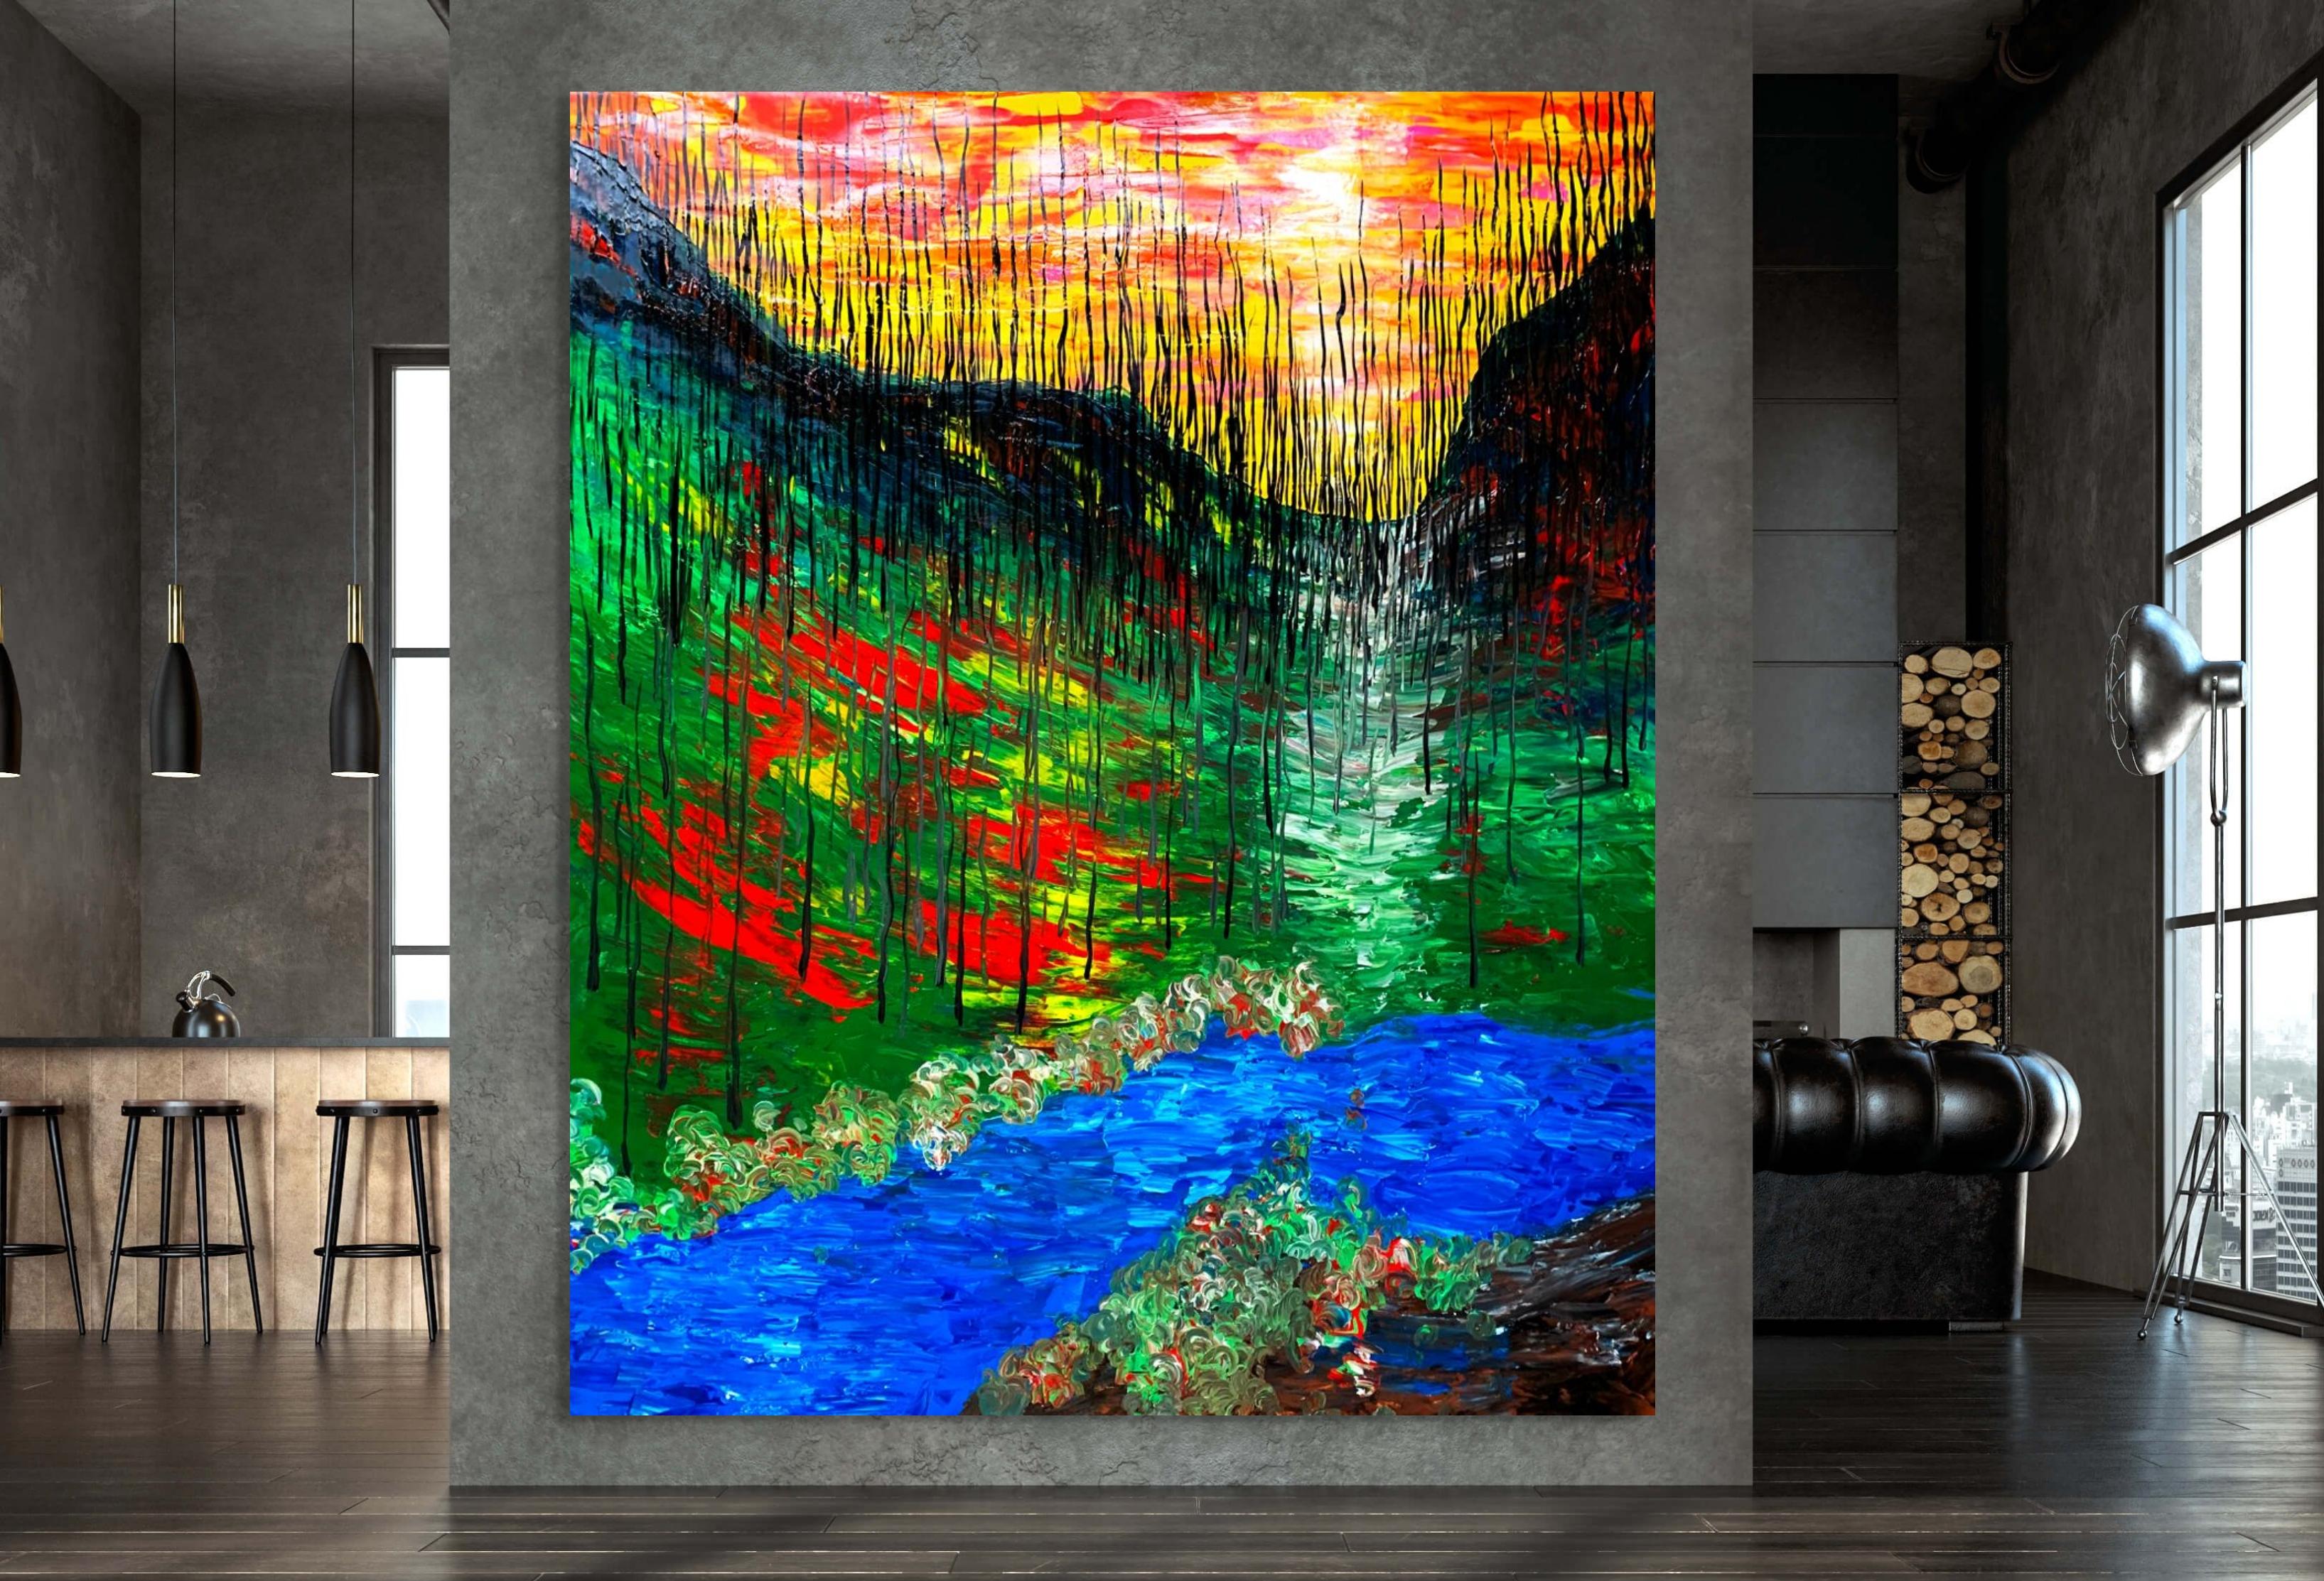 Gully d'arbres morts - Expressionnisme abstrait Painting par Estelle Asmodelle